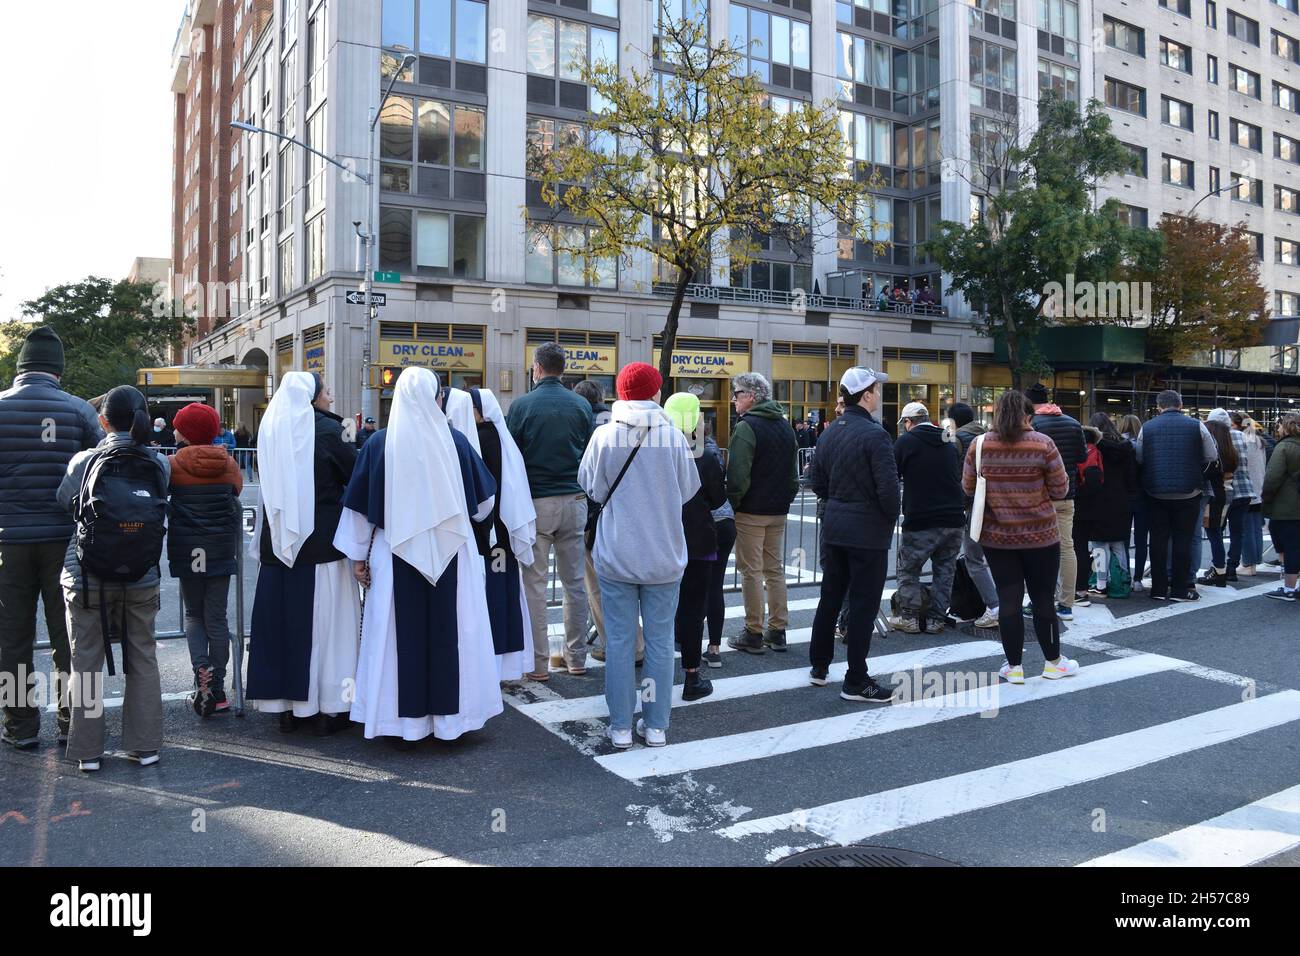 New York, USA. 7th Nov, 2021. A group of nuns enjoying the 2021 NYC Marathon on First Avenue in Manhattan, New York, USA. Credit: Stacey DiFazio/Alamy Live News. Stock Photo